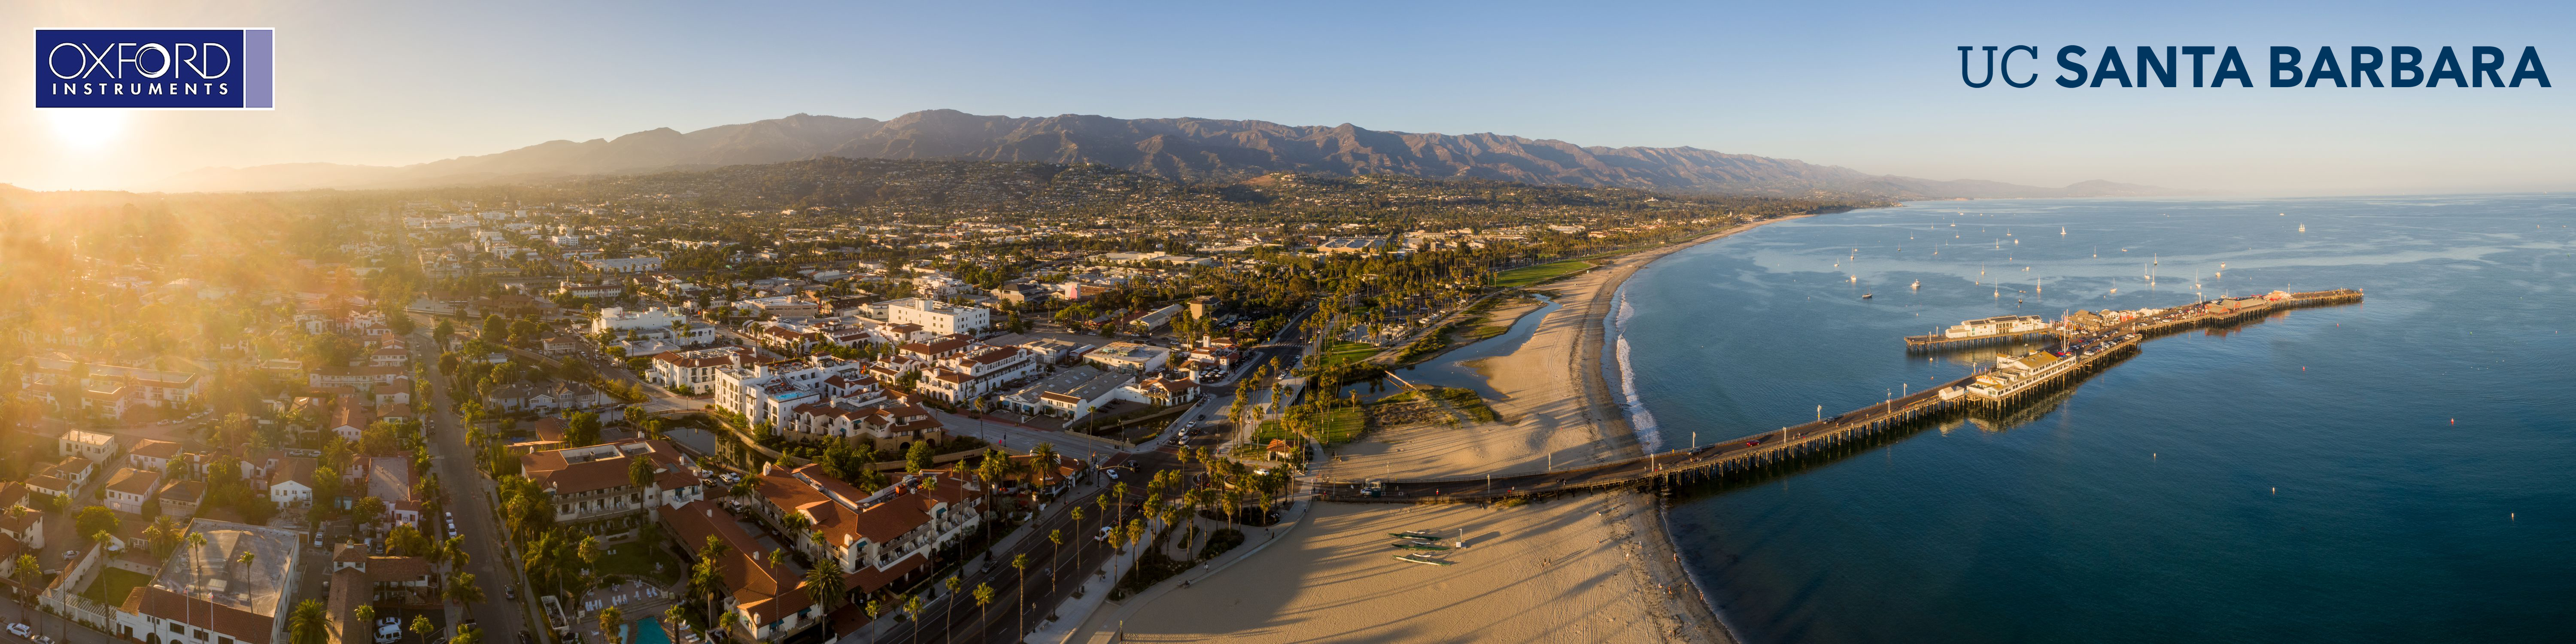 Scenic view of Santa Barbara, California coast